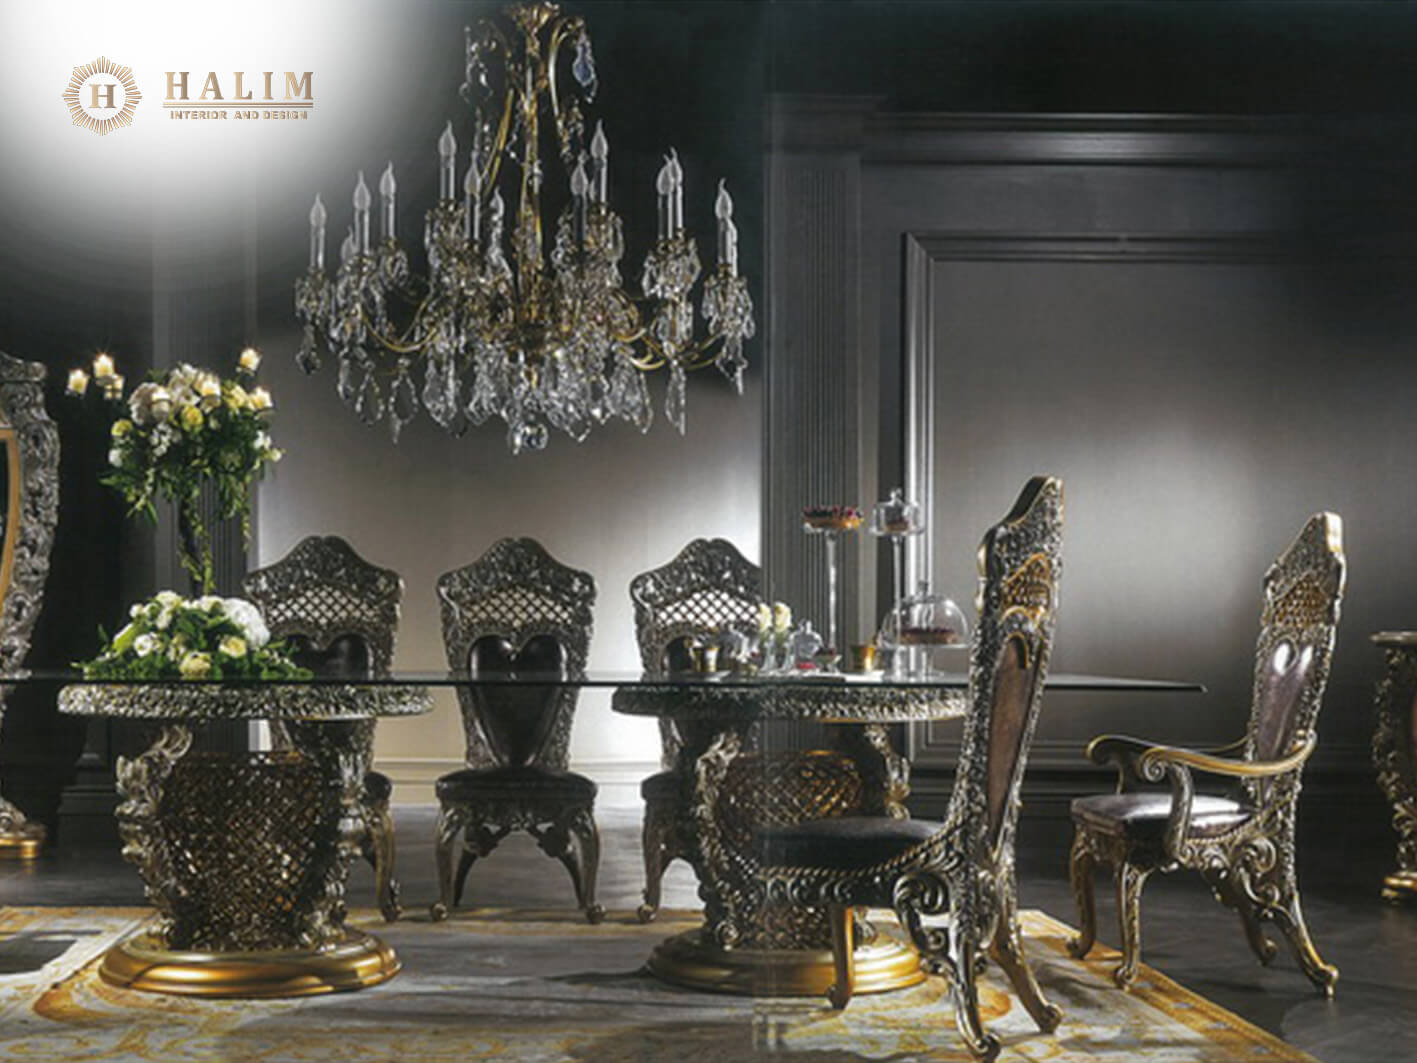 Halim Interior modern furniture contemporer american style minimalist european classic surabaya dining set 10000 23